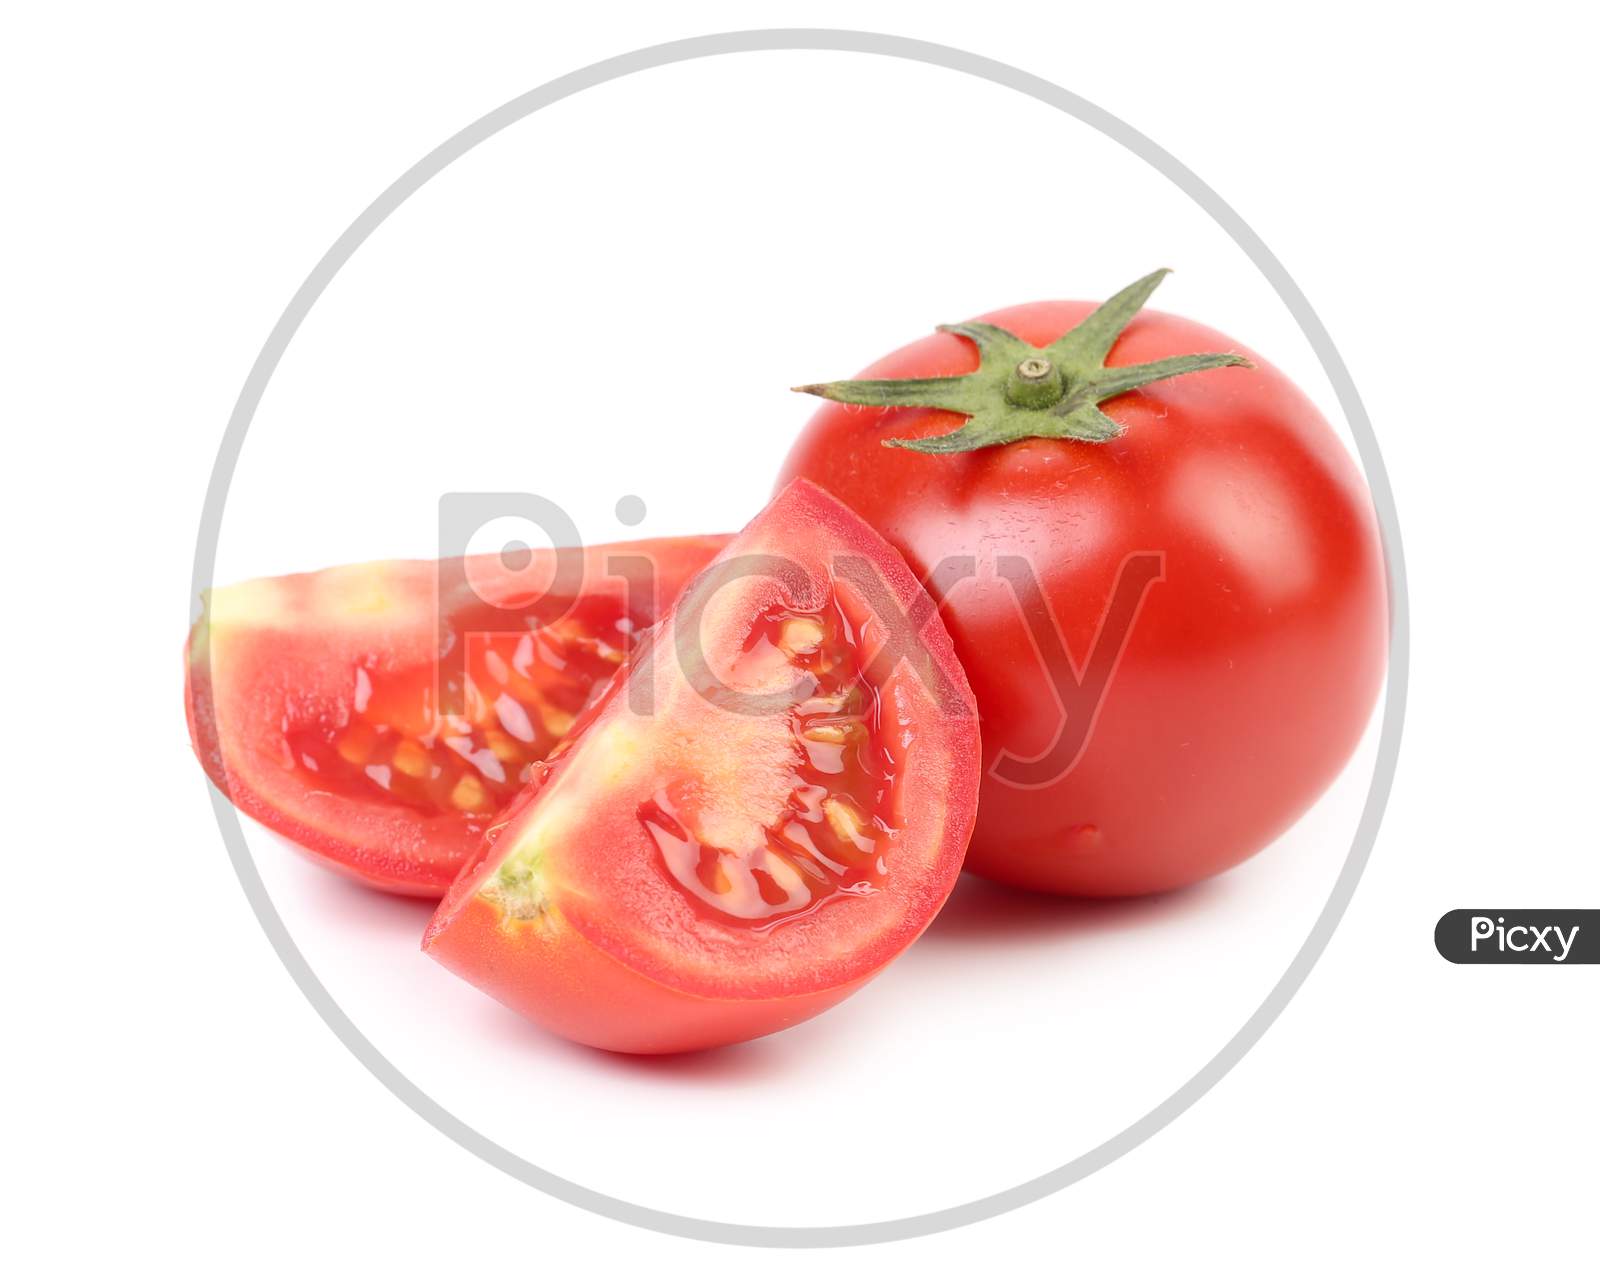 Fresh Tomato Whole And Segment. Isolated On A White Background.